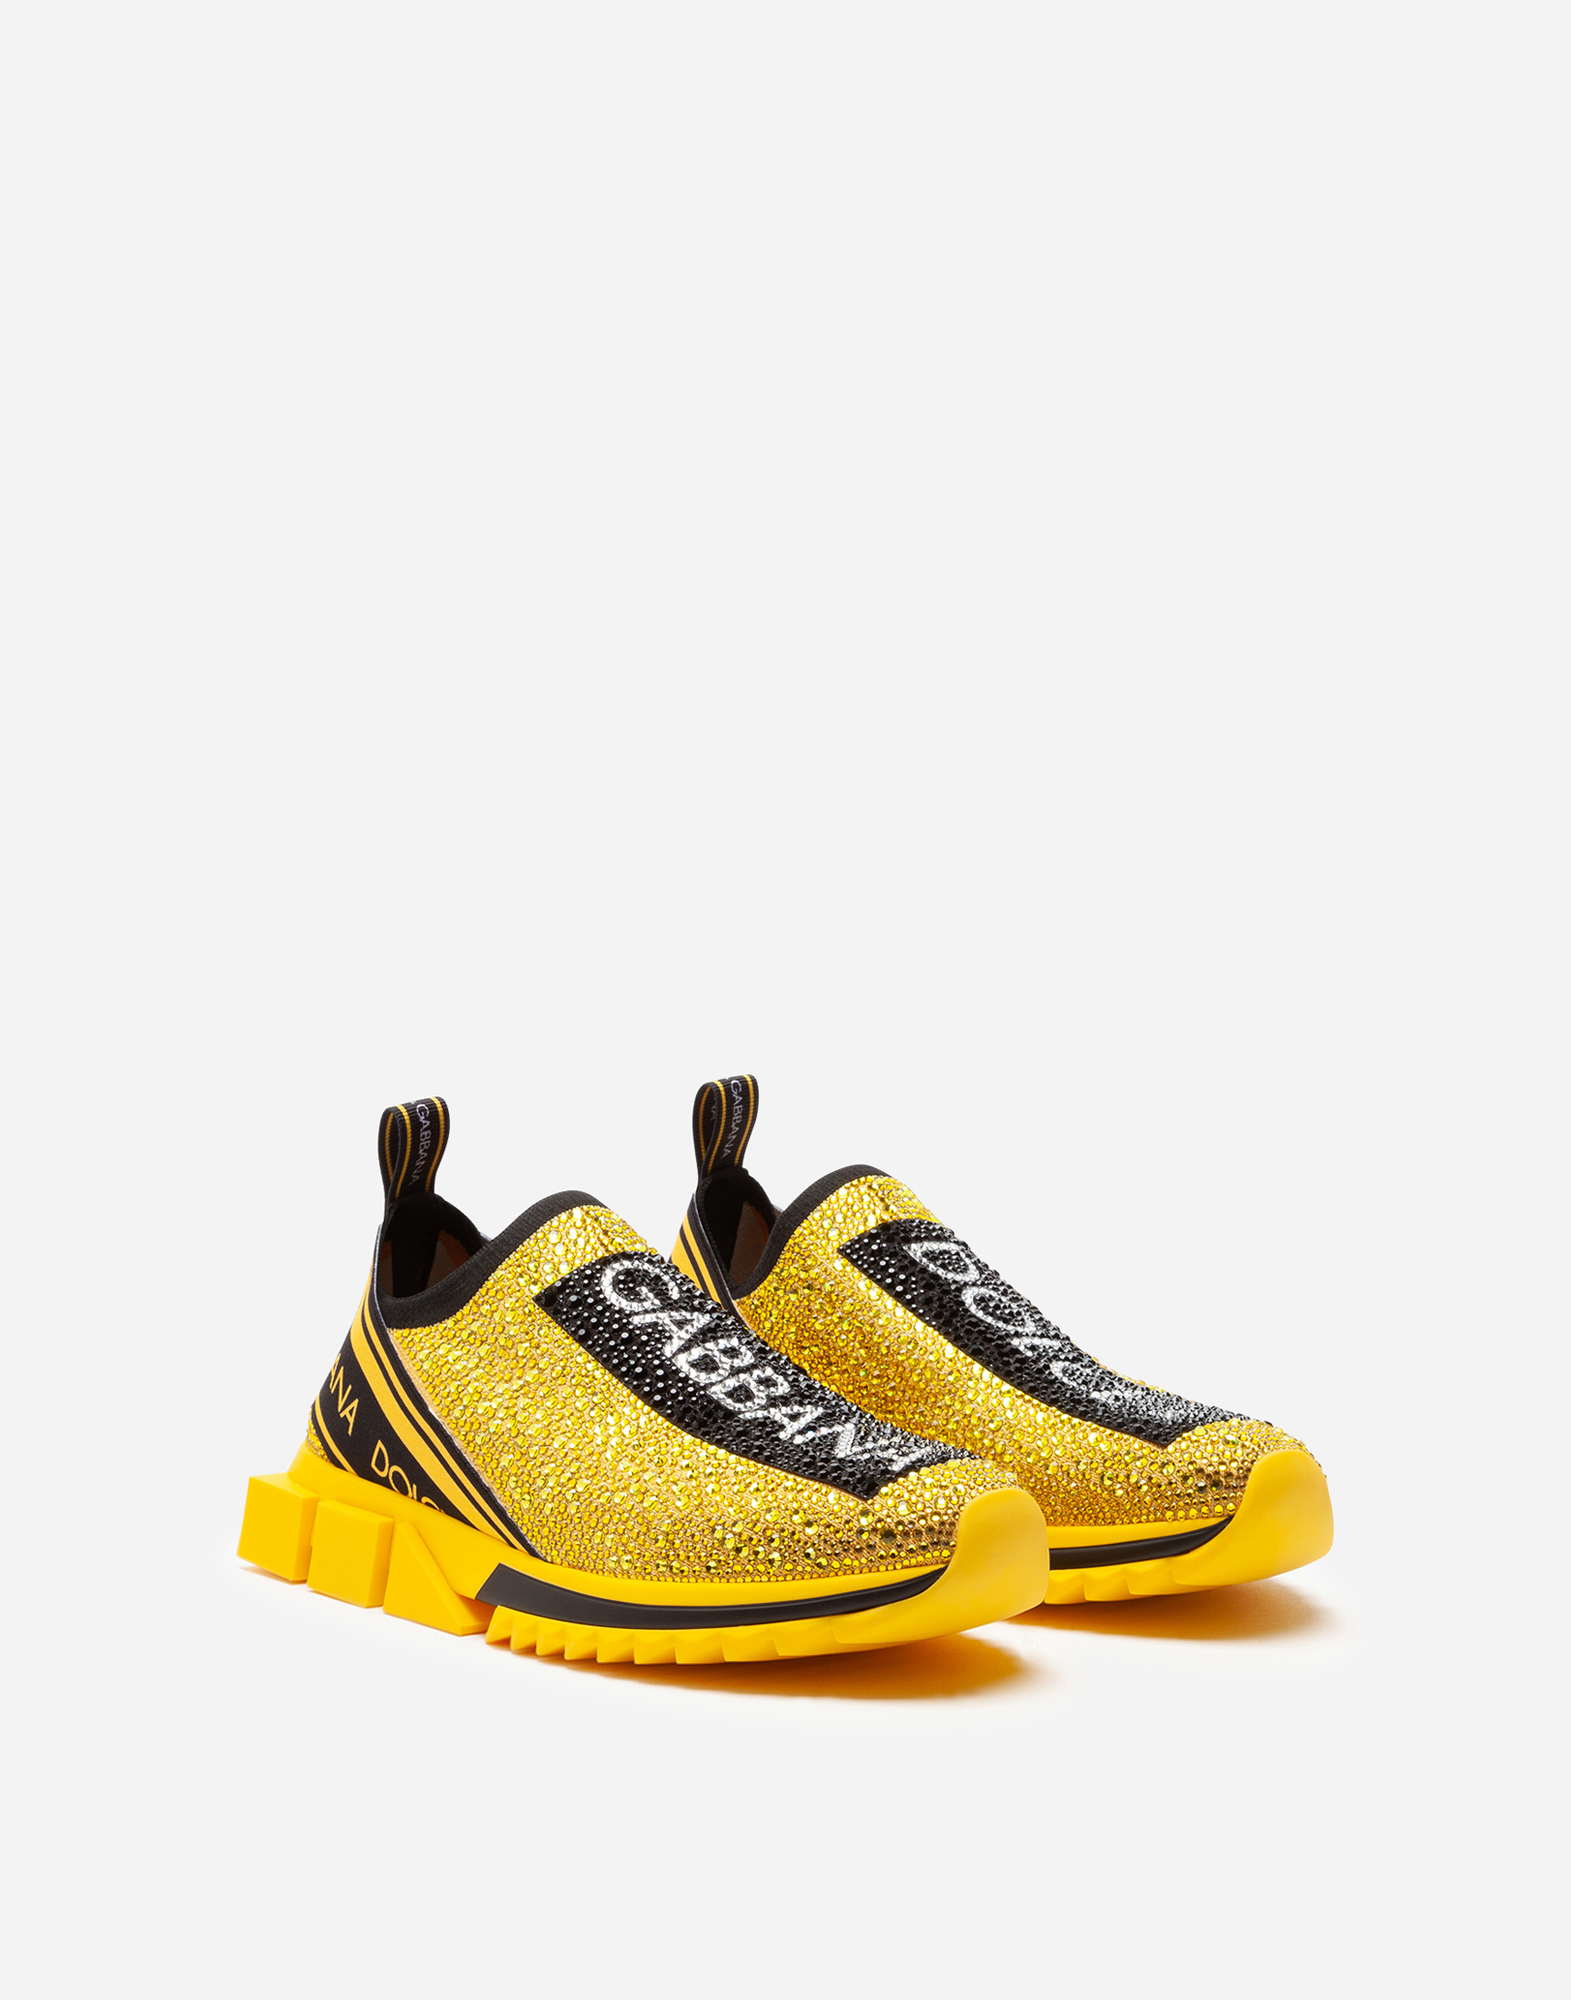 dolce gabbana shoes yellow